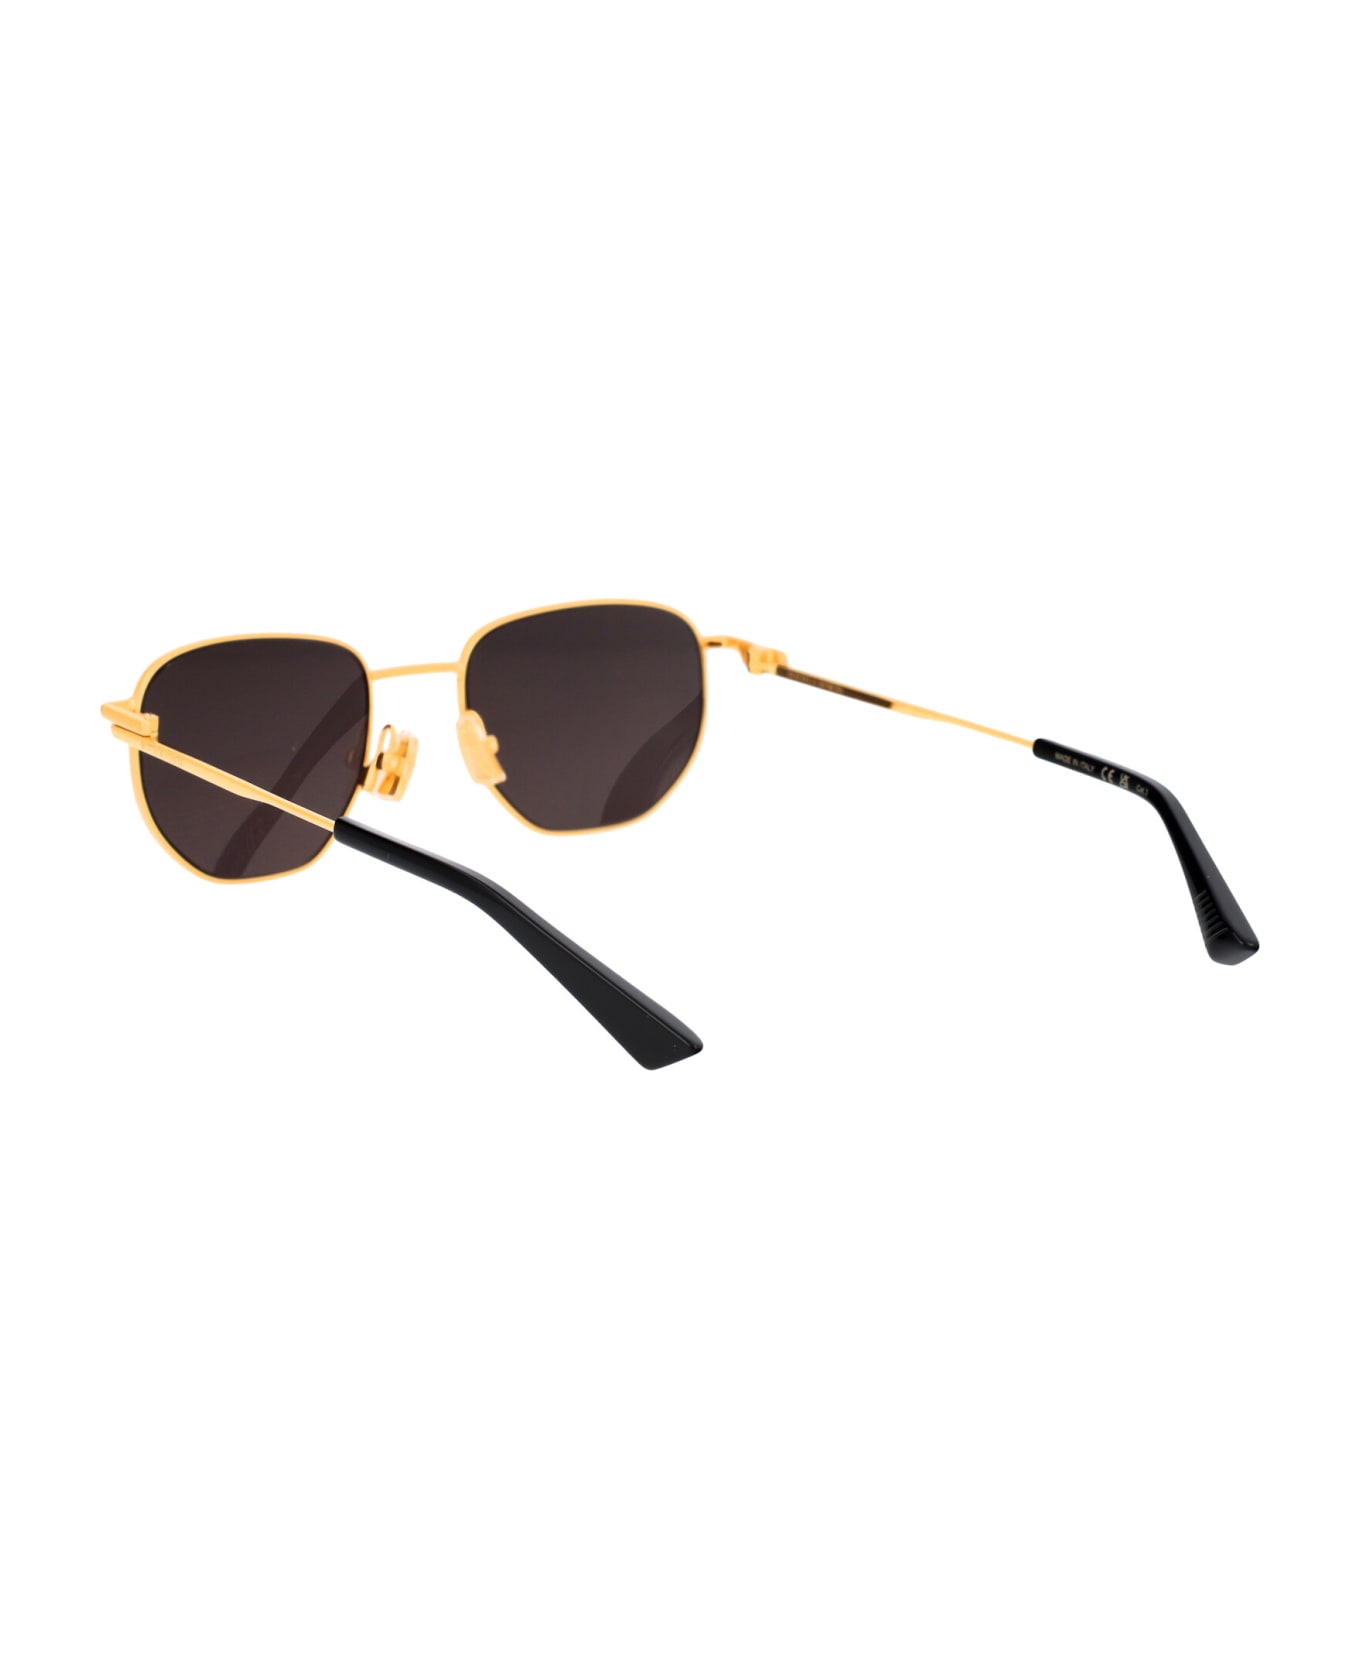 Bottega Veneta Eyewear Bv1301s Sunglasses - 001 GOLD GOLD GREY